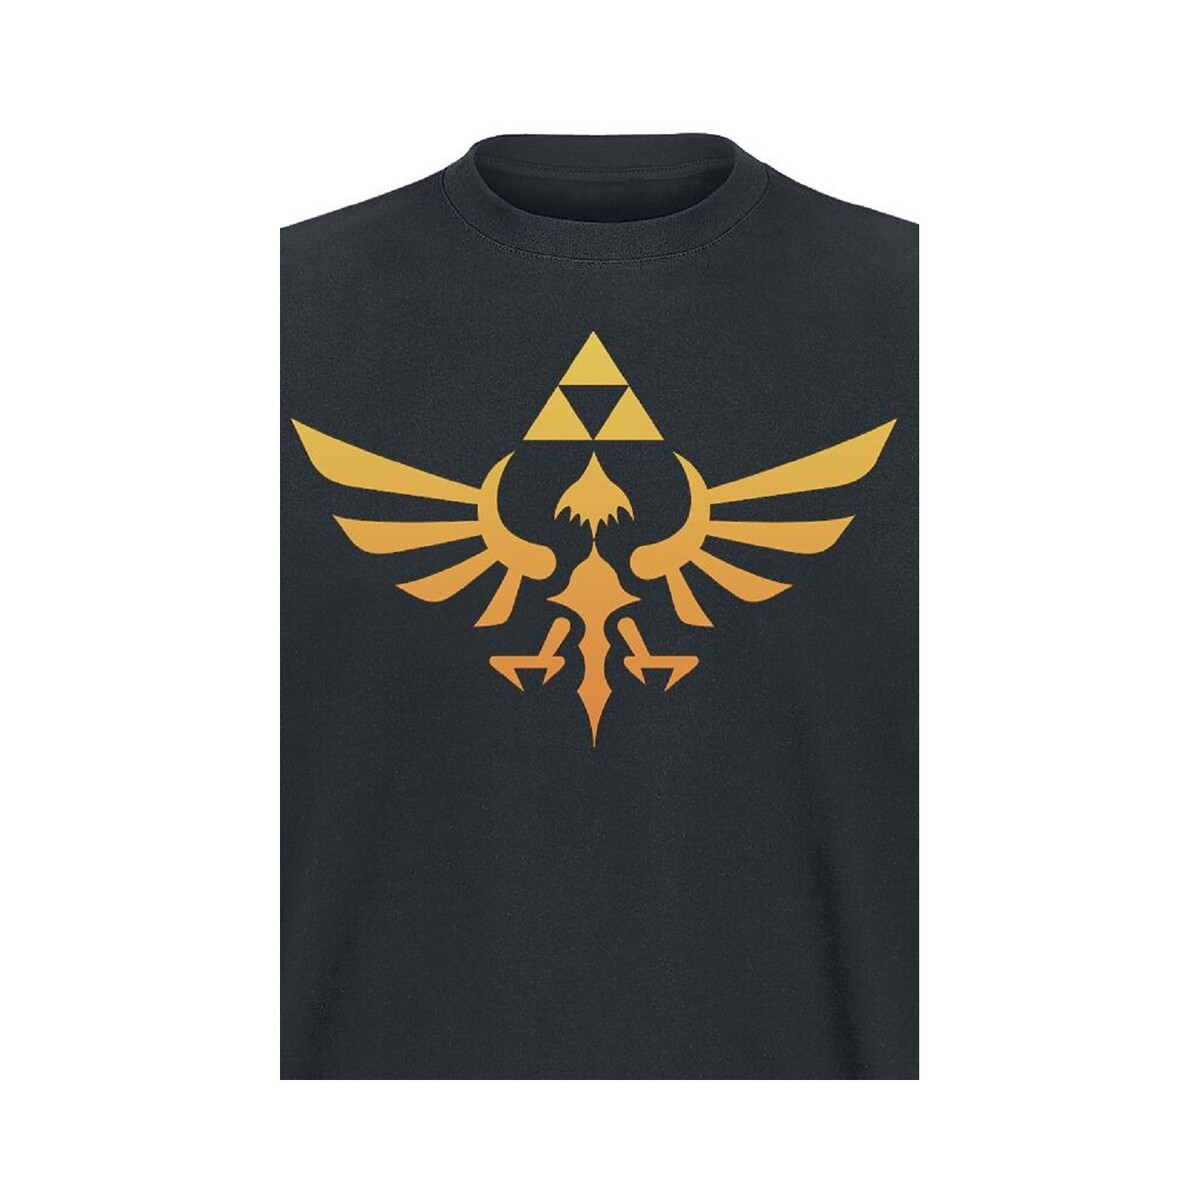 Nintendo オフィシャル商品 ユニセックス Hyrule ゼルダの伝説 レギュラーフィット Tシャツ 半袖 トップス 【海外通販】